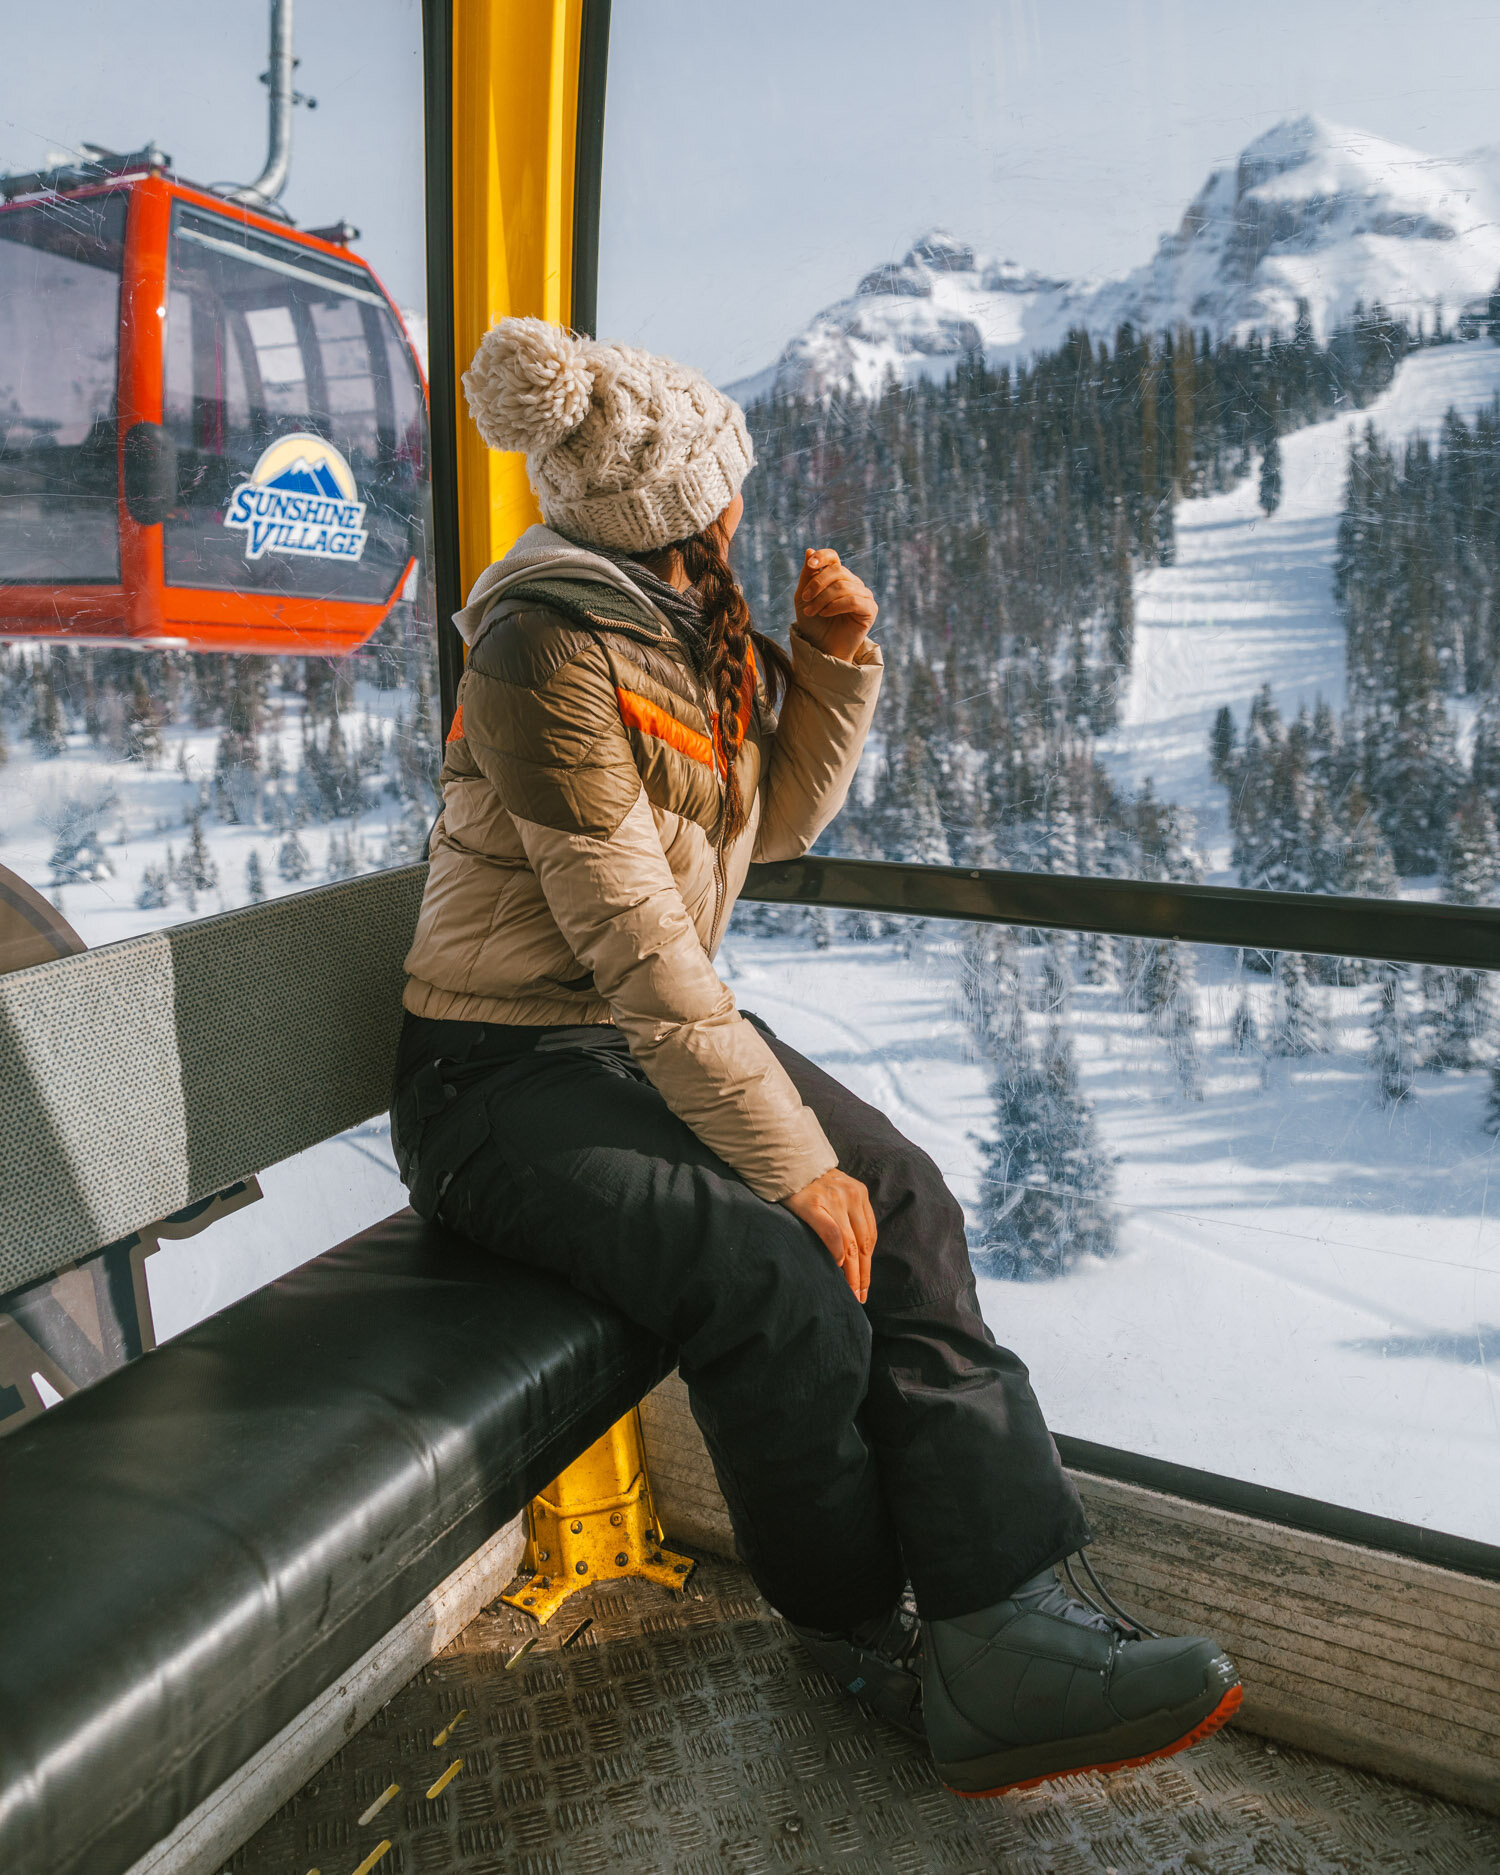 Banff Sunshine Village gondola // The Ultimate Guide to Visiting Banff in Winter